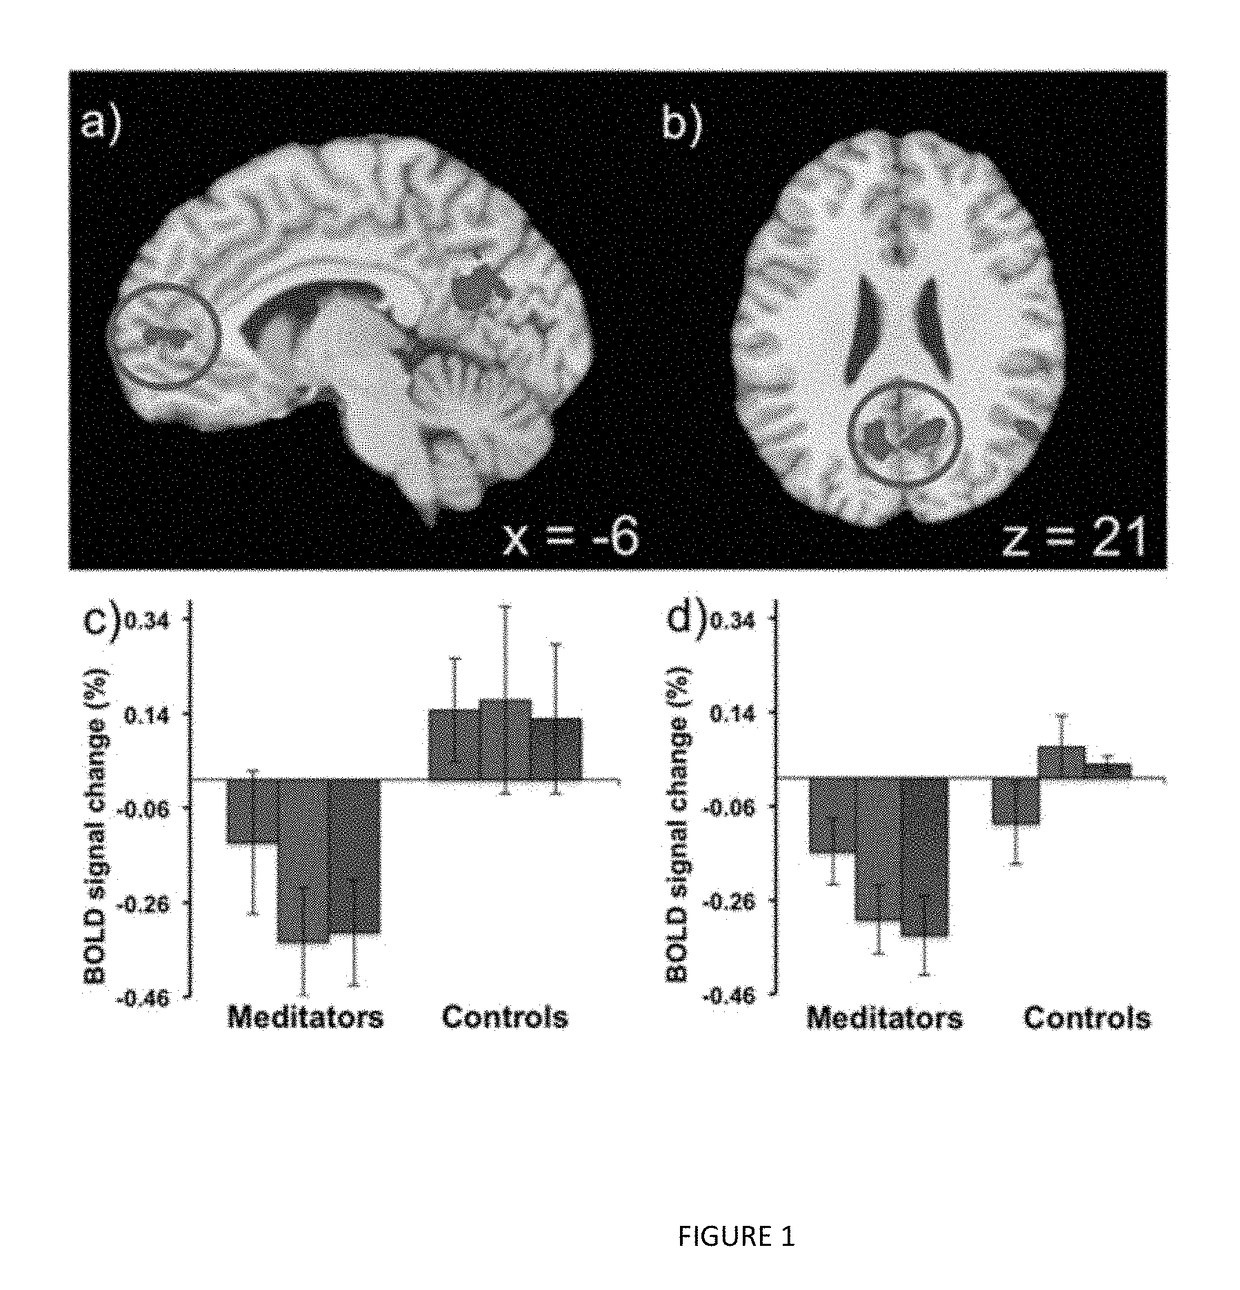 Method of correlating brain activity